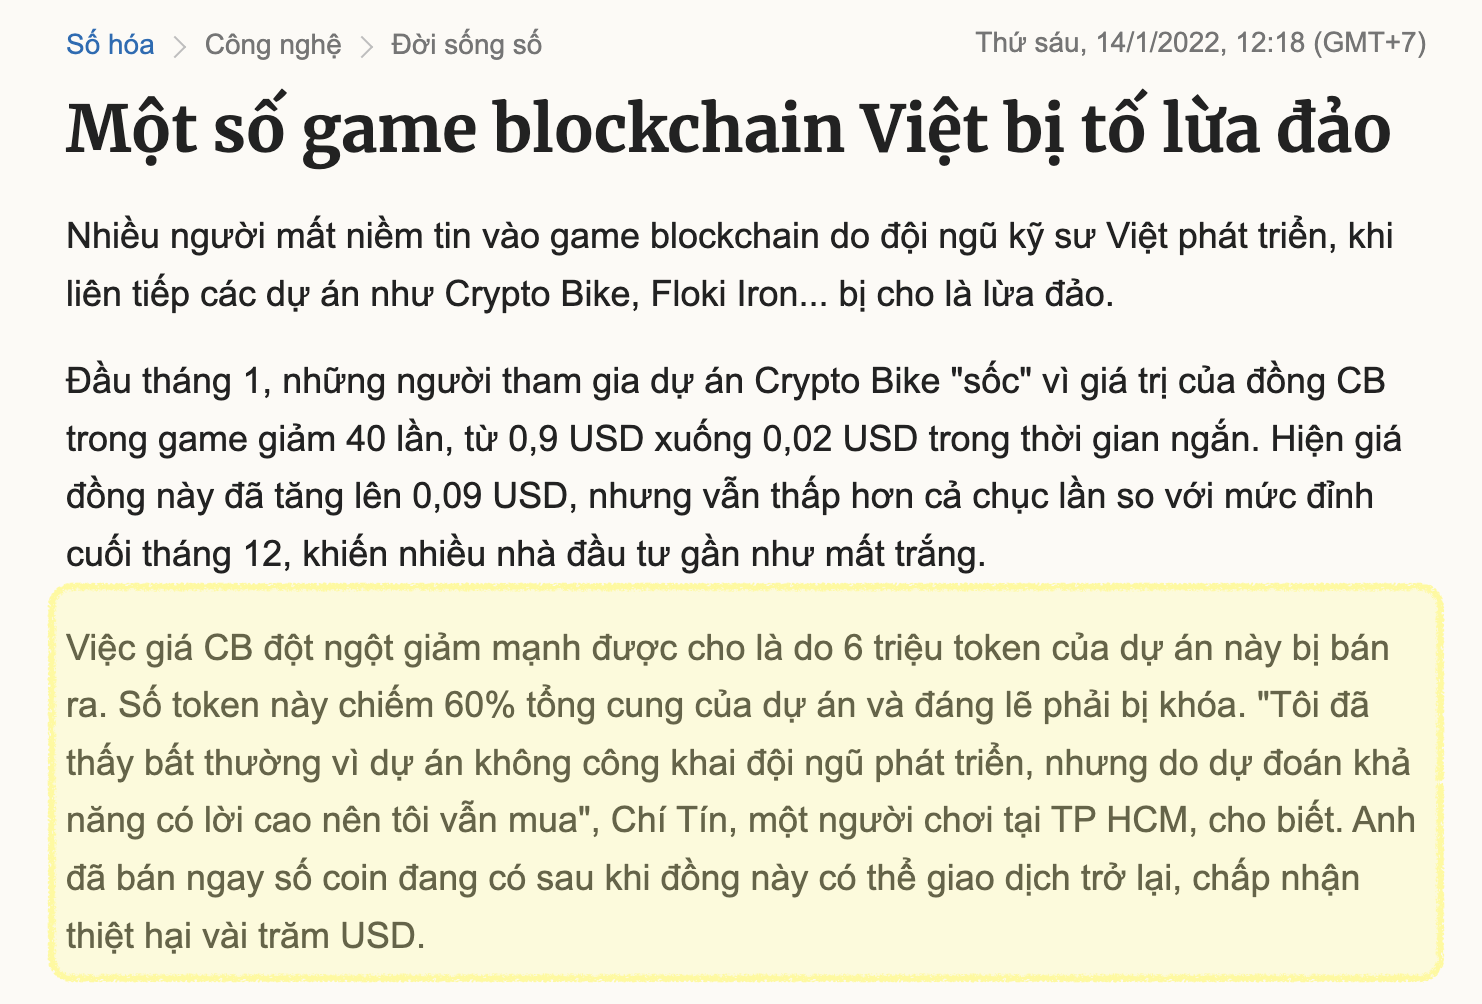 <a href="https://vnexpress.net/mot-so-game-blockchain-viet-bi-to-lua-dao-4415913.html">Một số game blockchain Việt bị tố lừa đảo - VnExpress Số hóa</a>